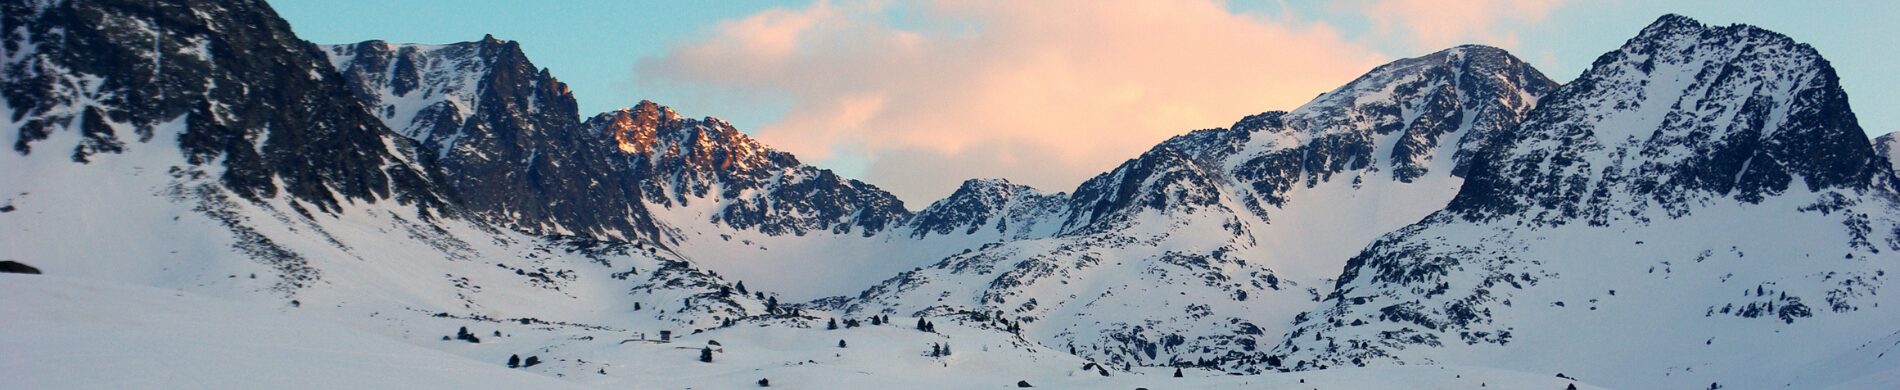 Destination : Andorre - Les matins du monde